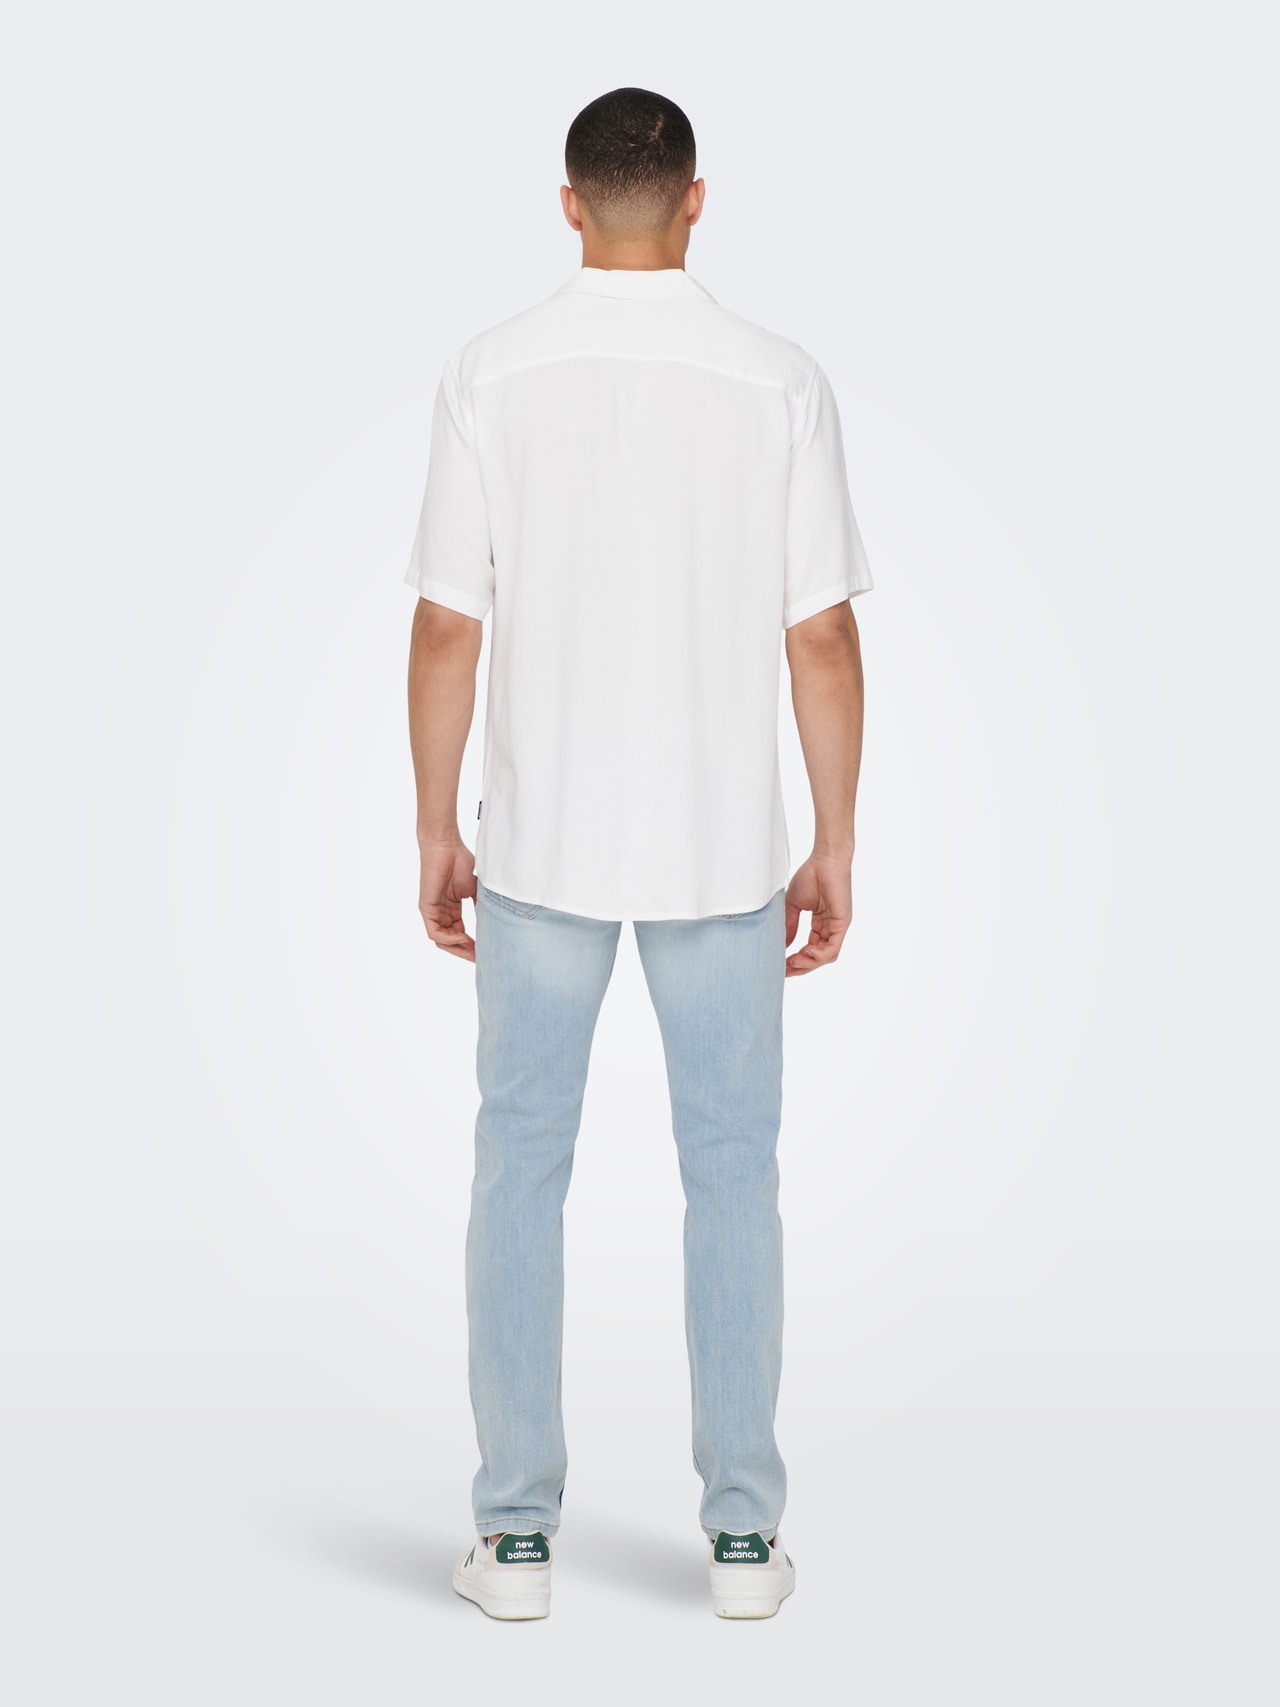 ONLY & SONS Regular Fit Resort collar Shirt -Bright White - 22024164